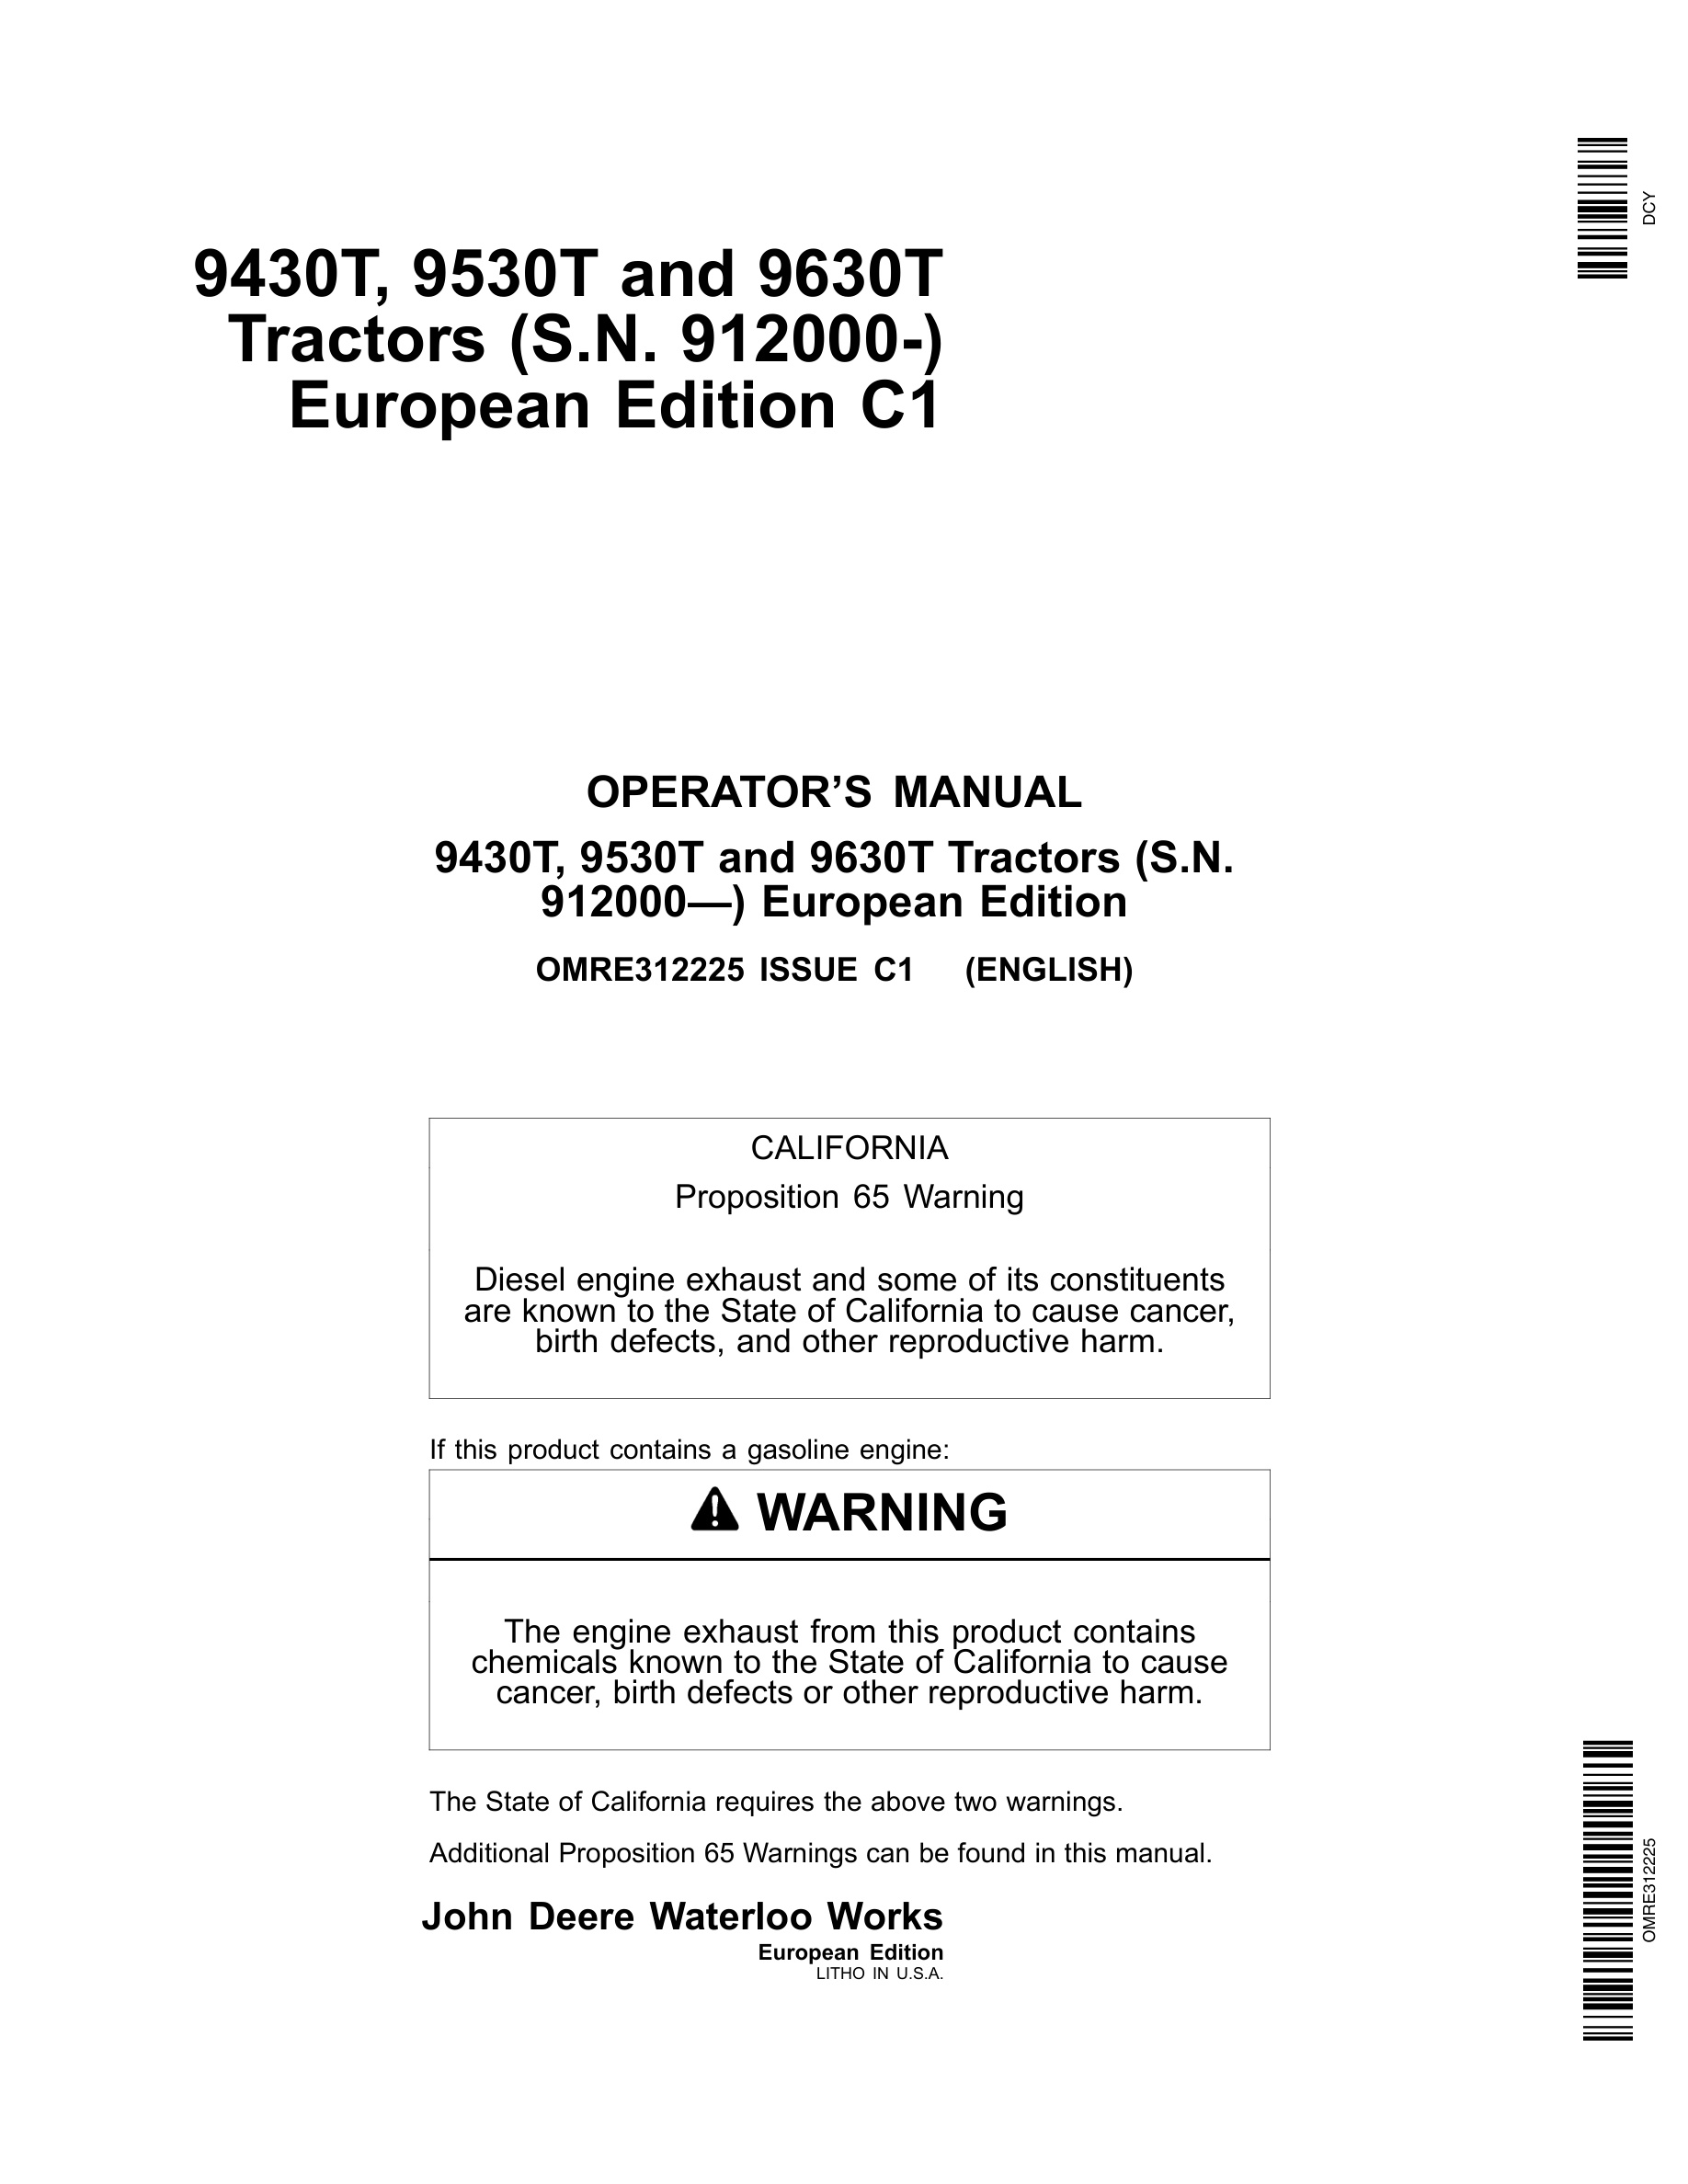 John Deere 9430t, 9530t And 9630t Tractors Operator Manuals OMRE312225-1